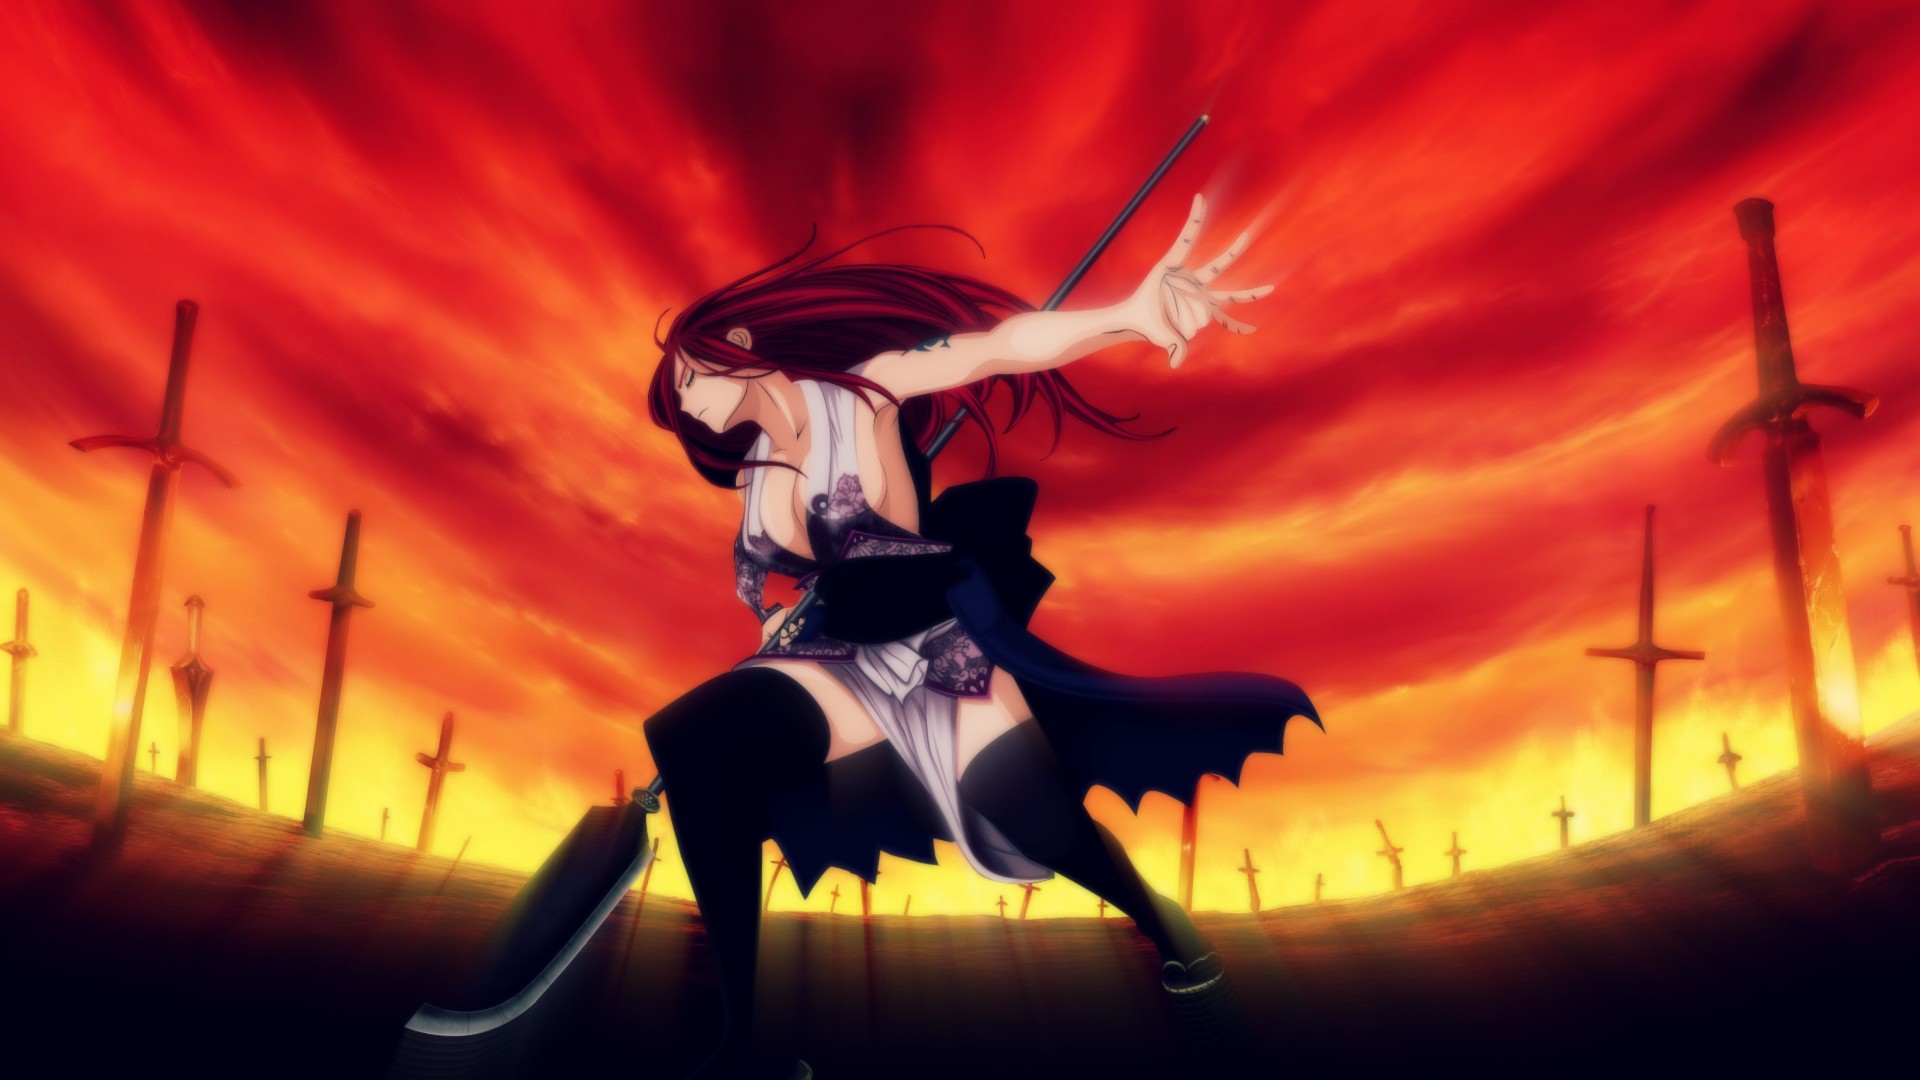 Anime 1920x1080 anime Fairy Tail Scarlet Erza anime girls fantasy art fantasy girl redhead long hair warrior orange sky sword